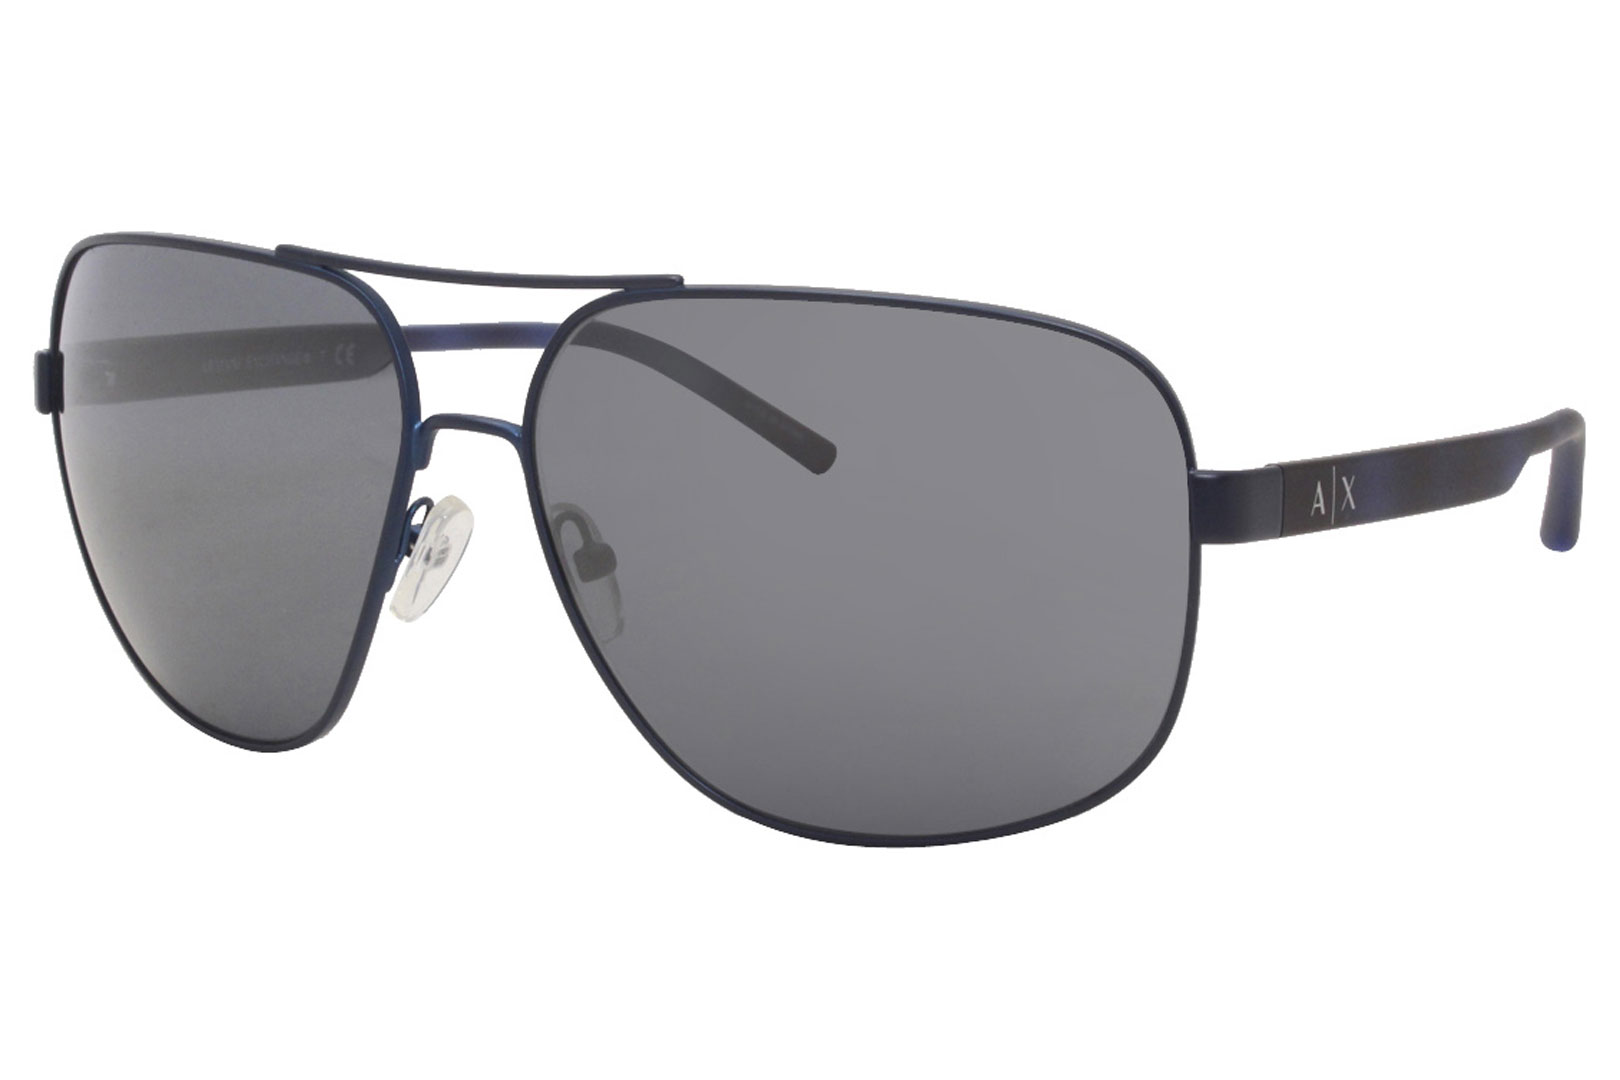 EAN 8056597039512 product image for Armani Exchange Sunglasses Men's AX2030S 6113/6G Matte Blue/Black Mirror 64 14mm | upcitemdb.com